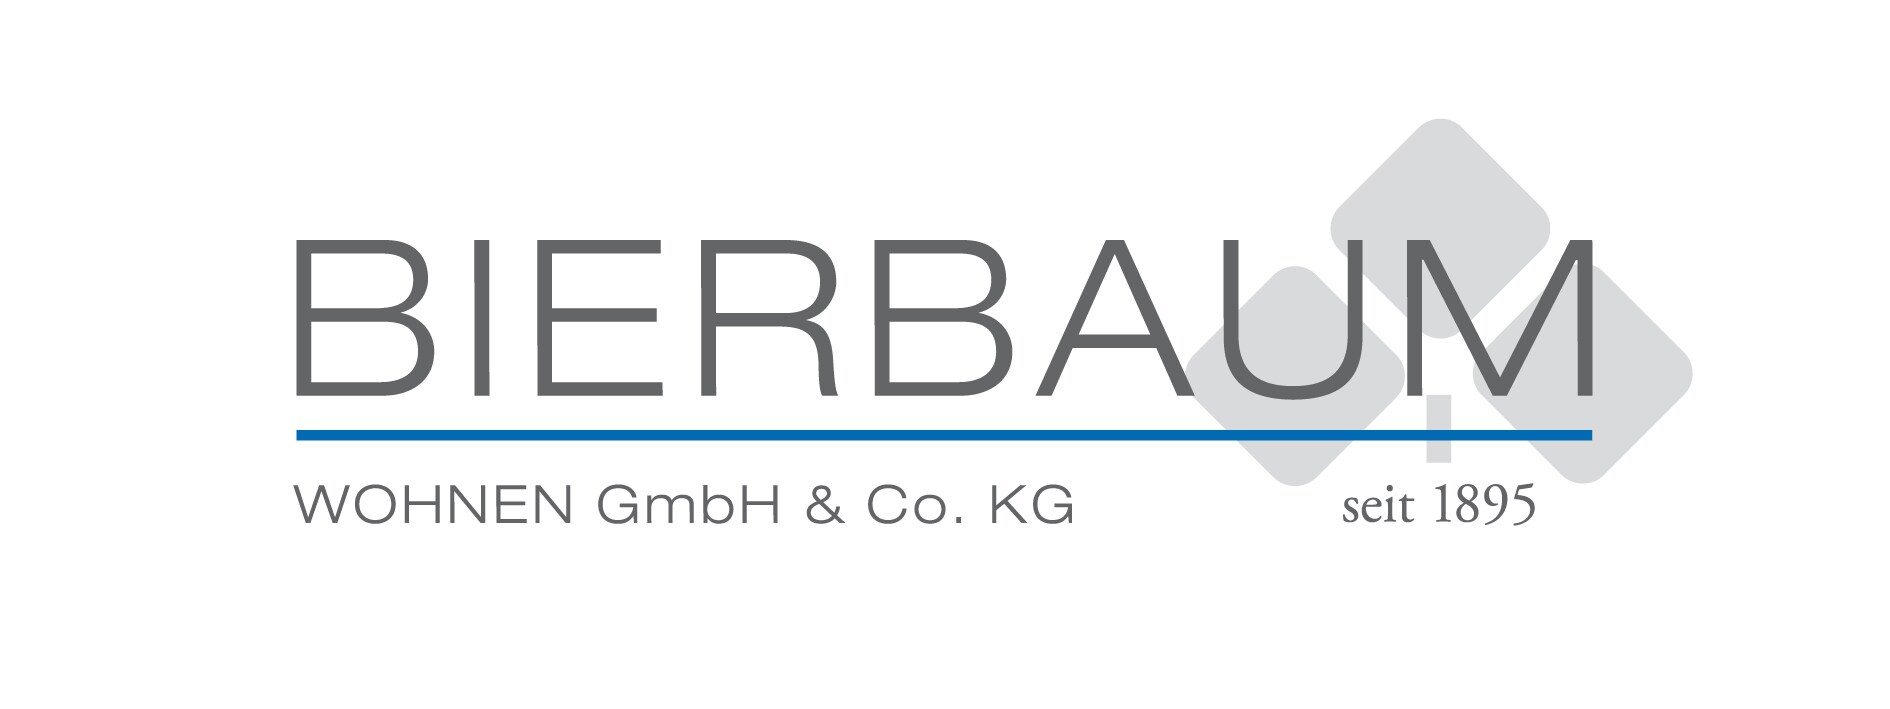 bierbaum-logo